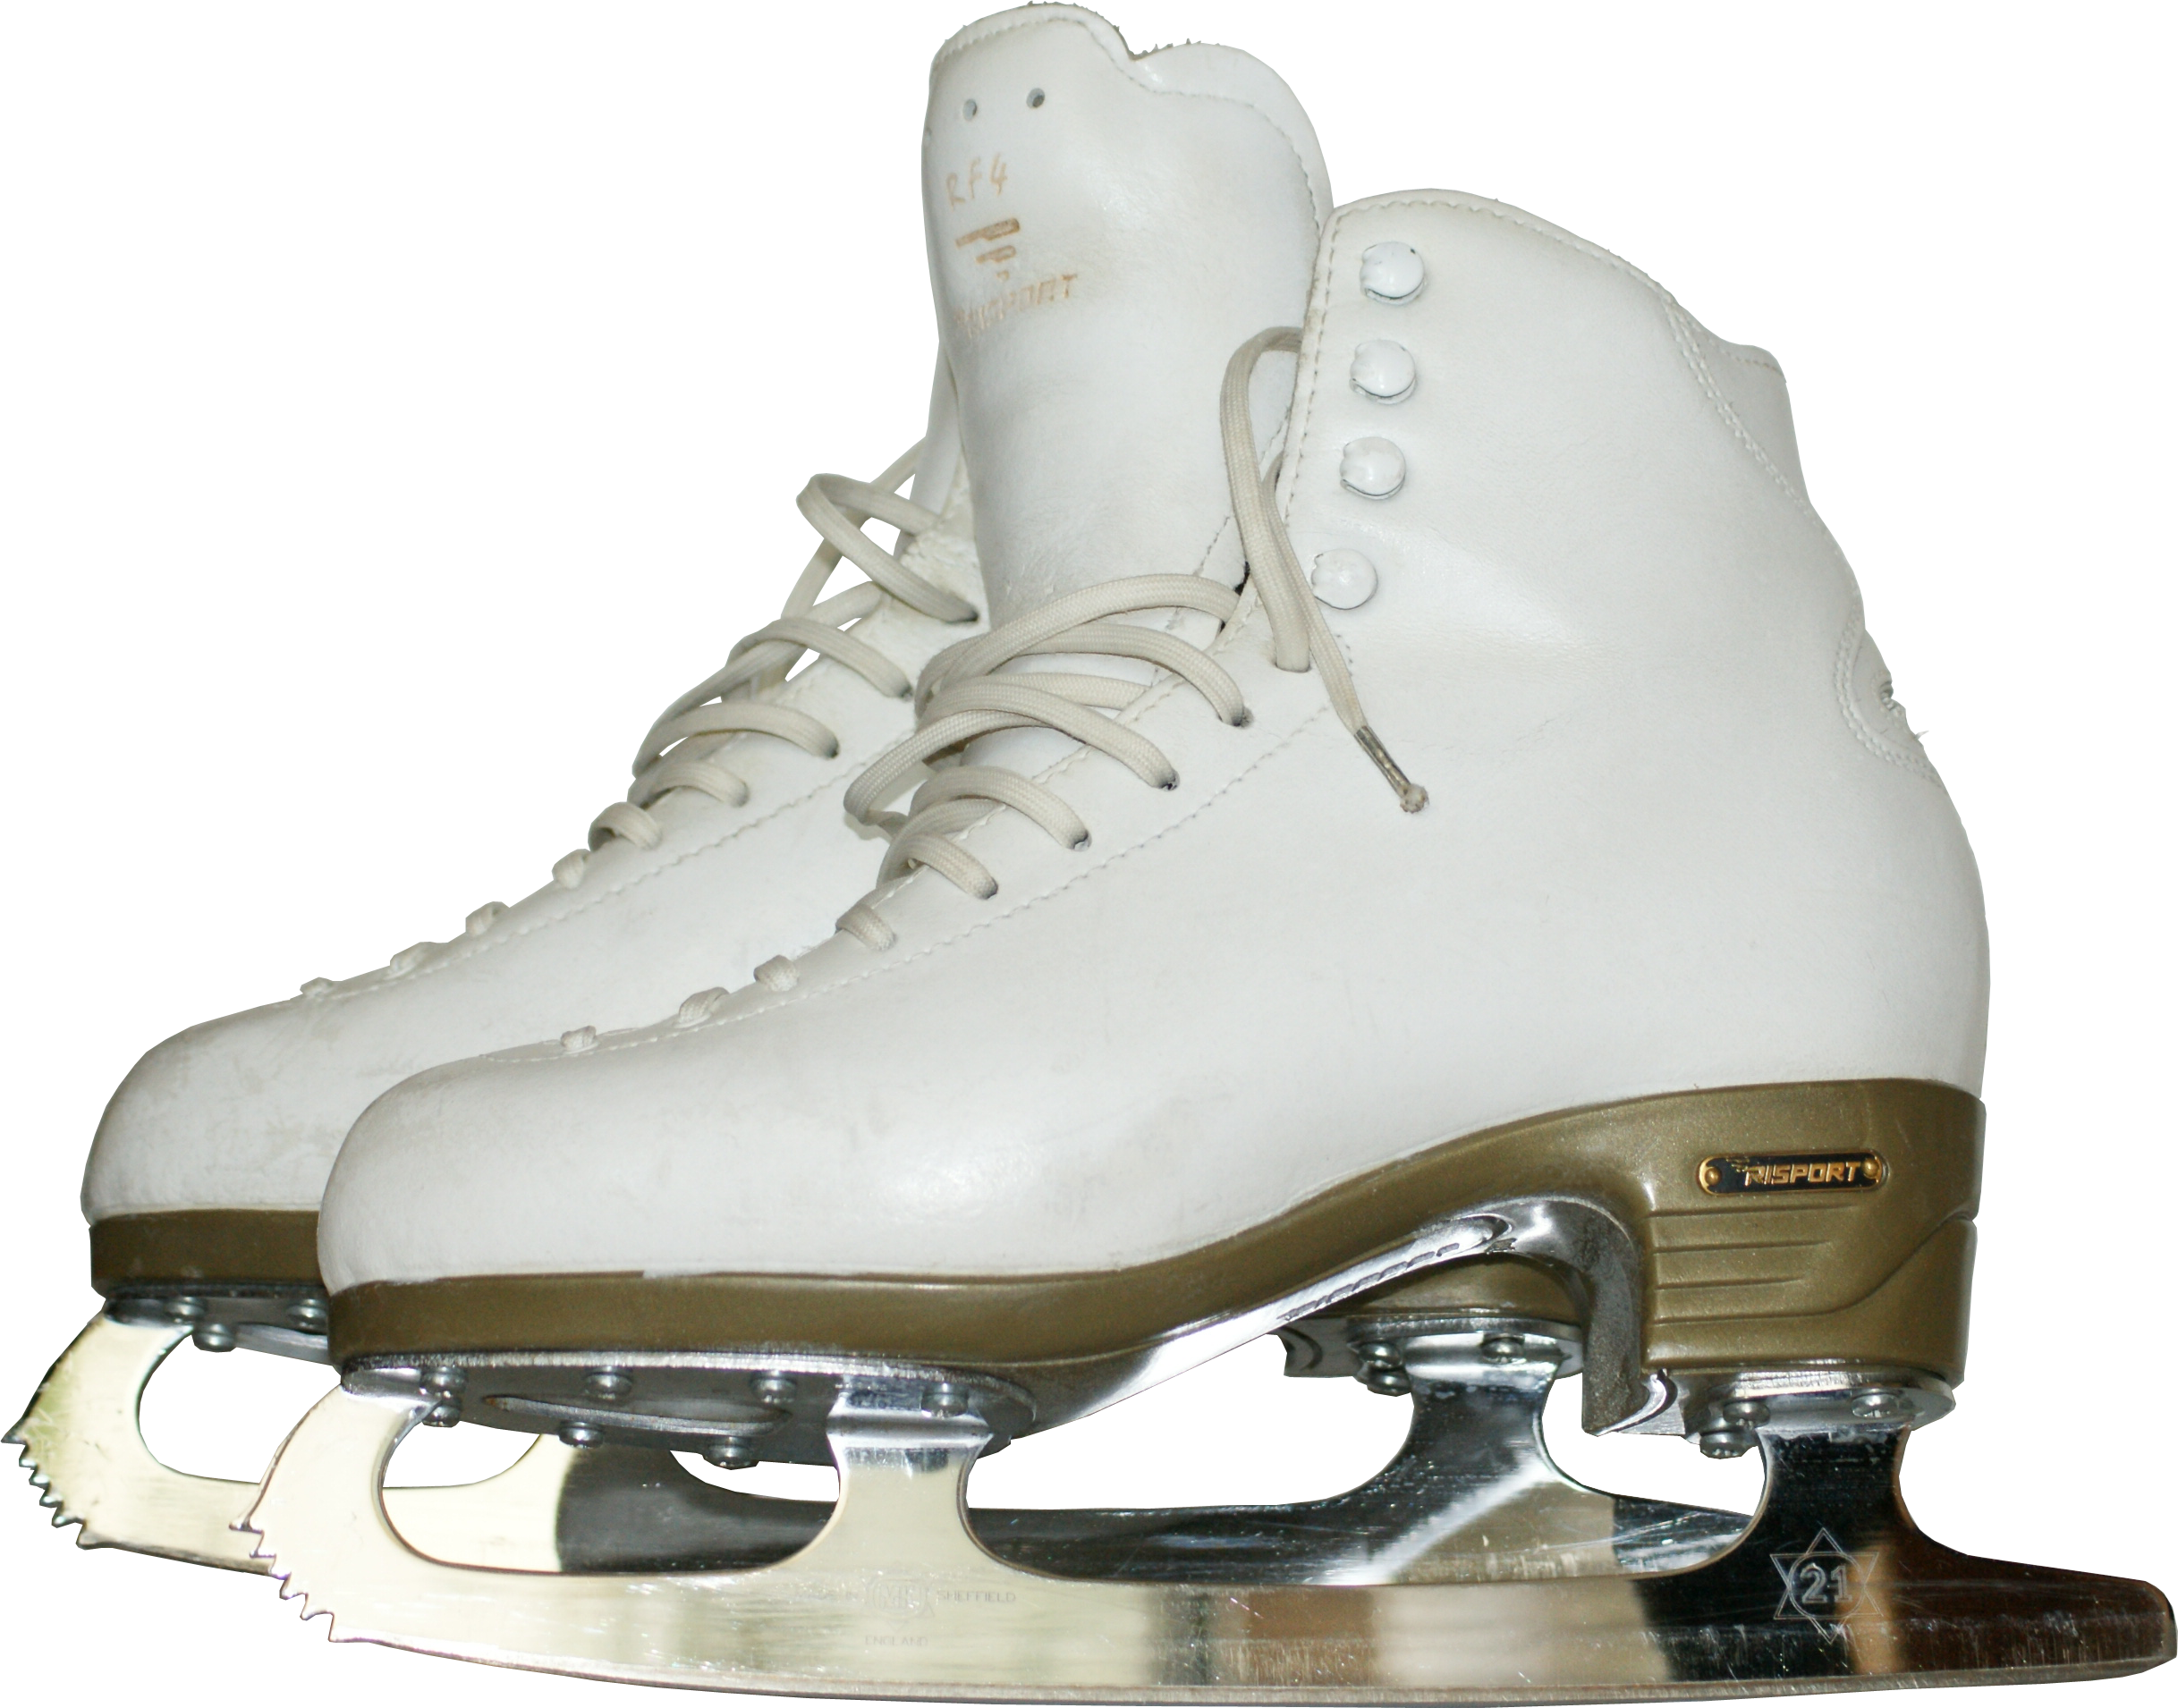 Chaussures de skate